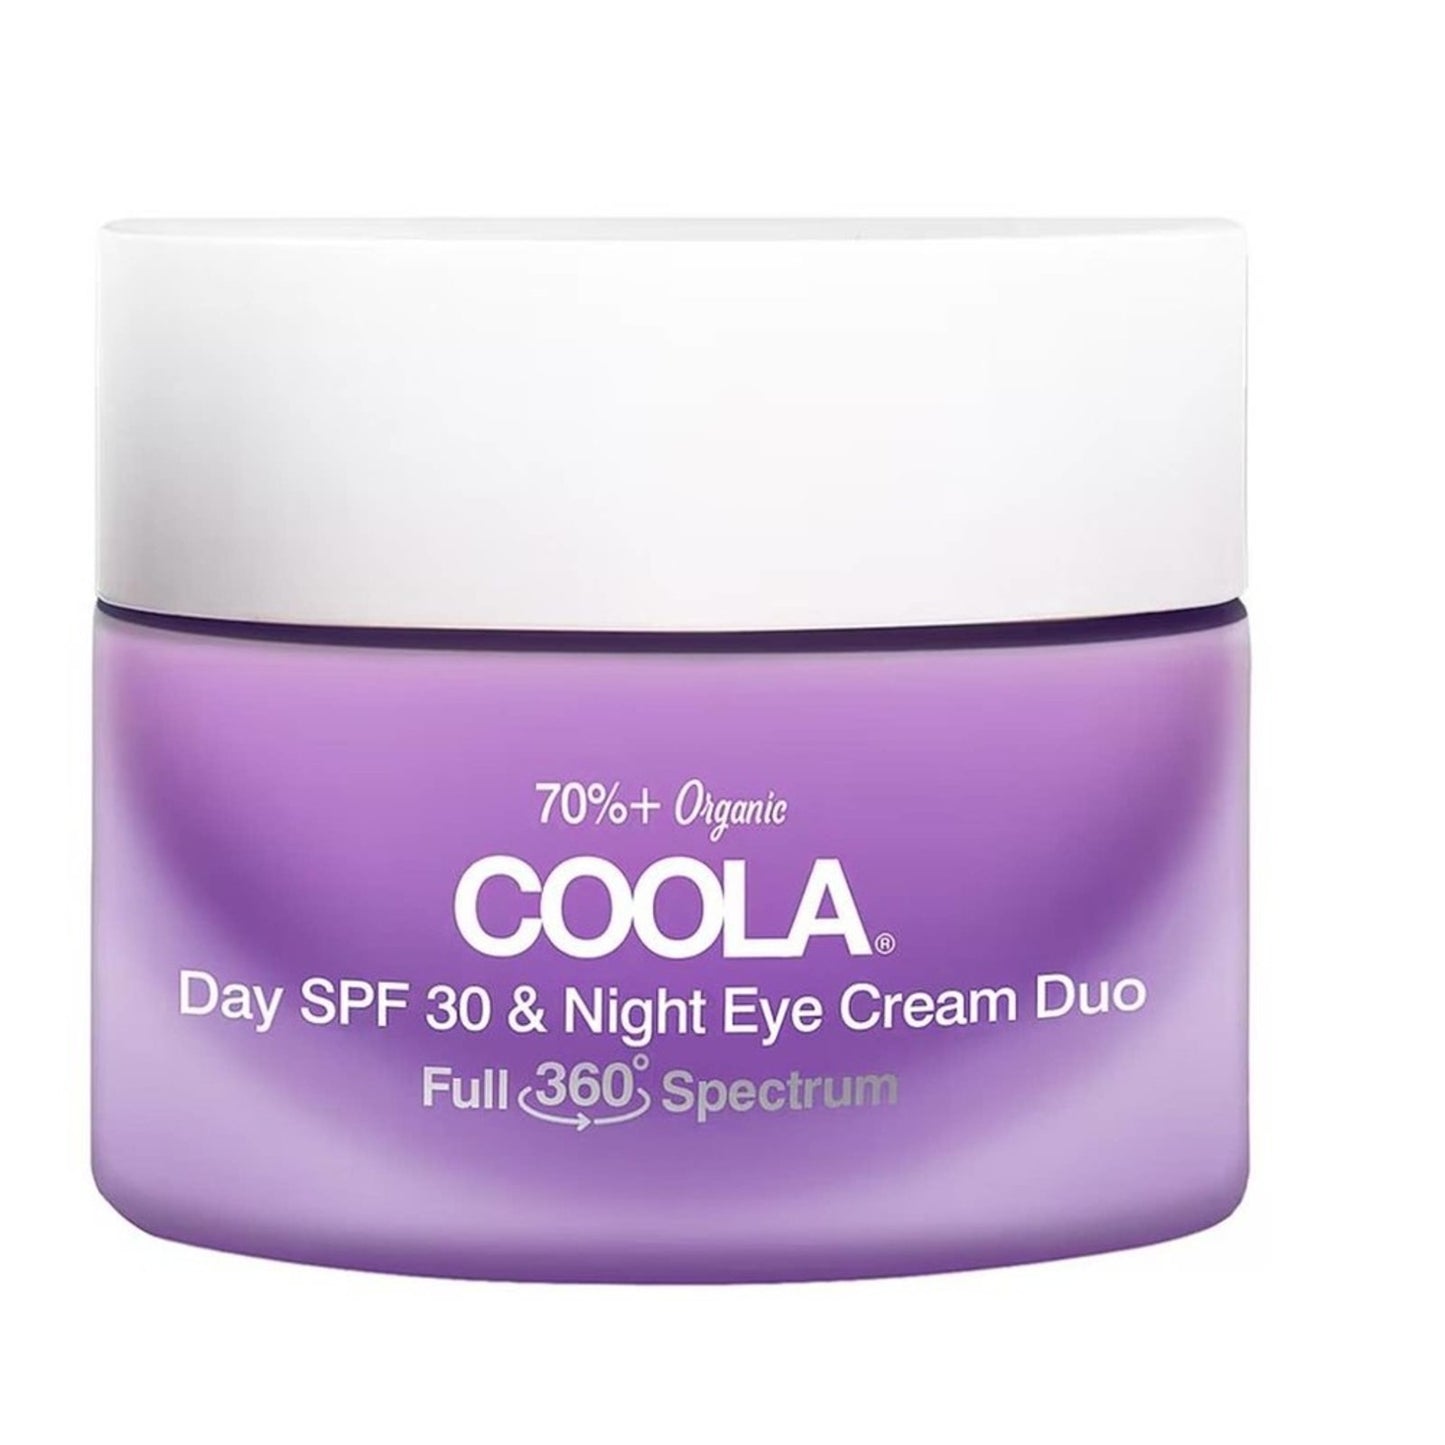 COOLA Day SPF 30 & Night Eye Cream Duo New in Box